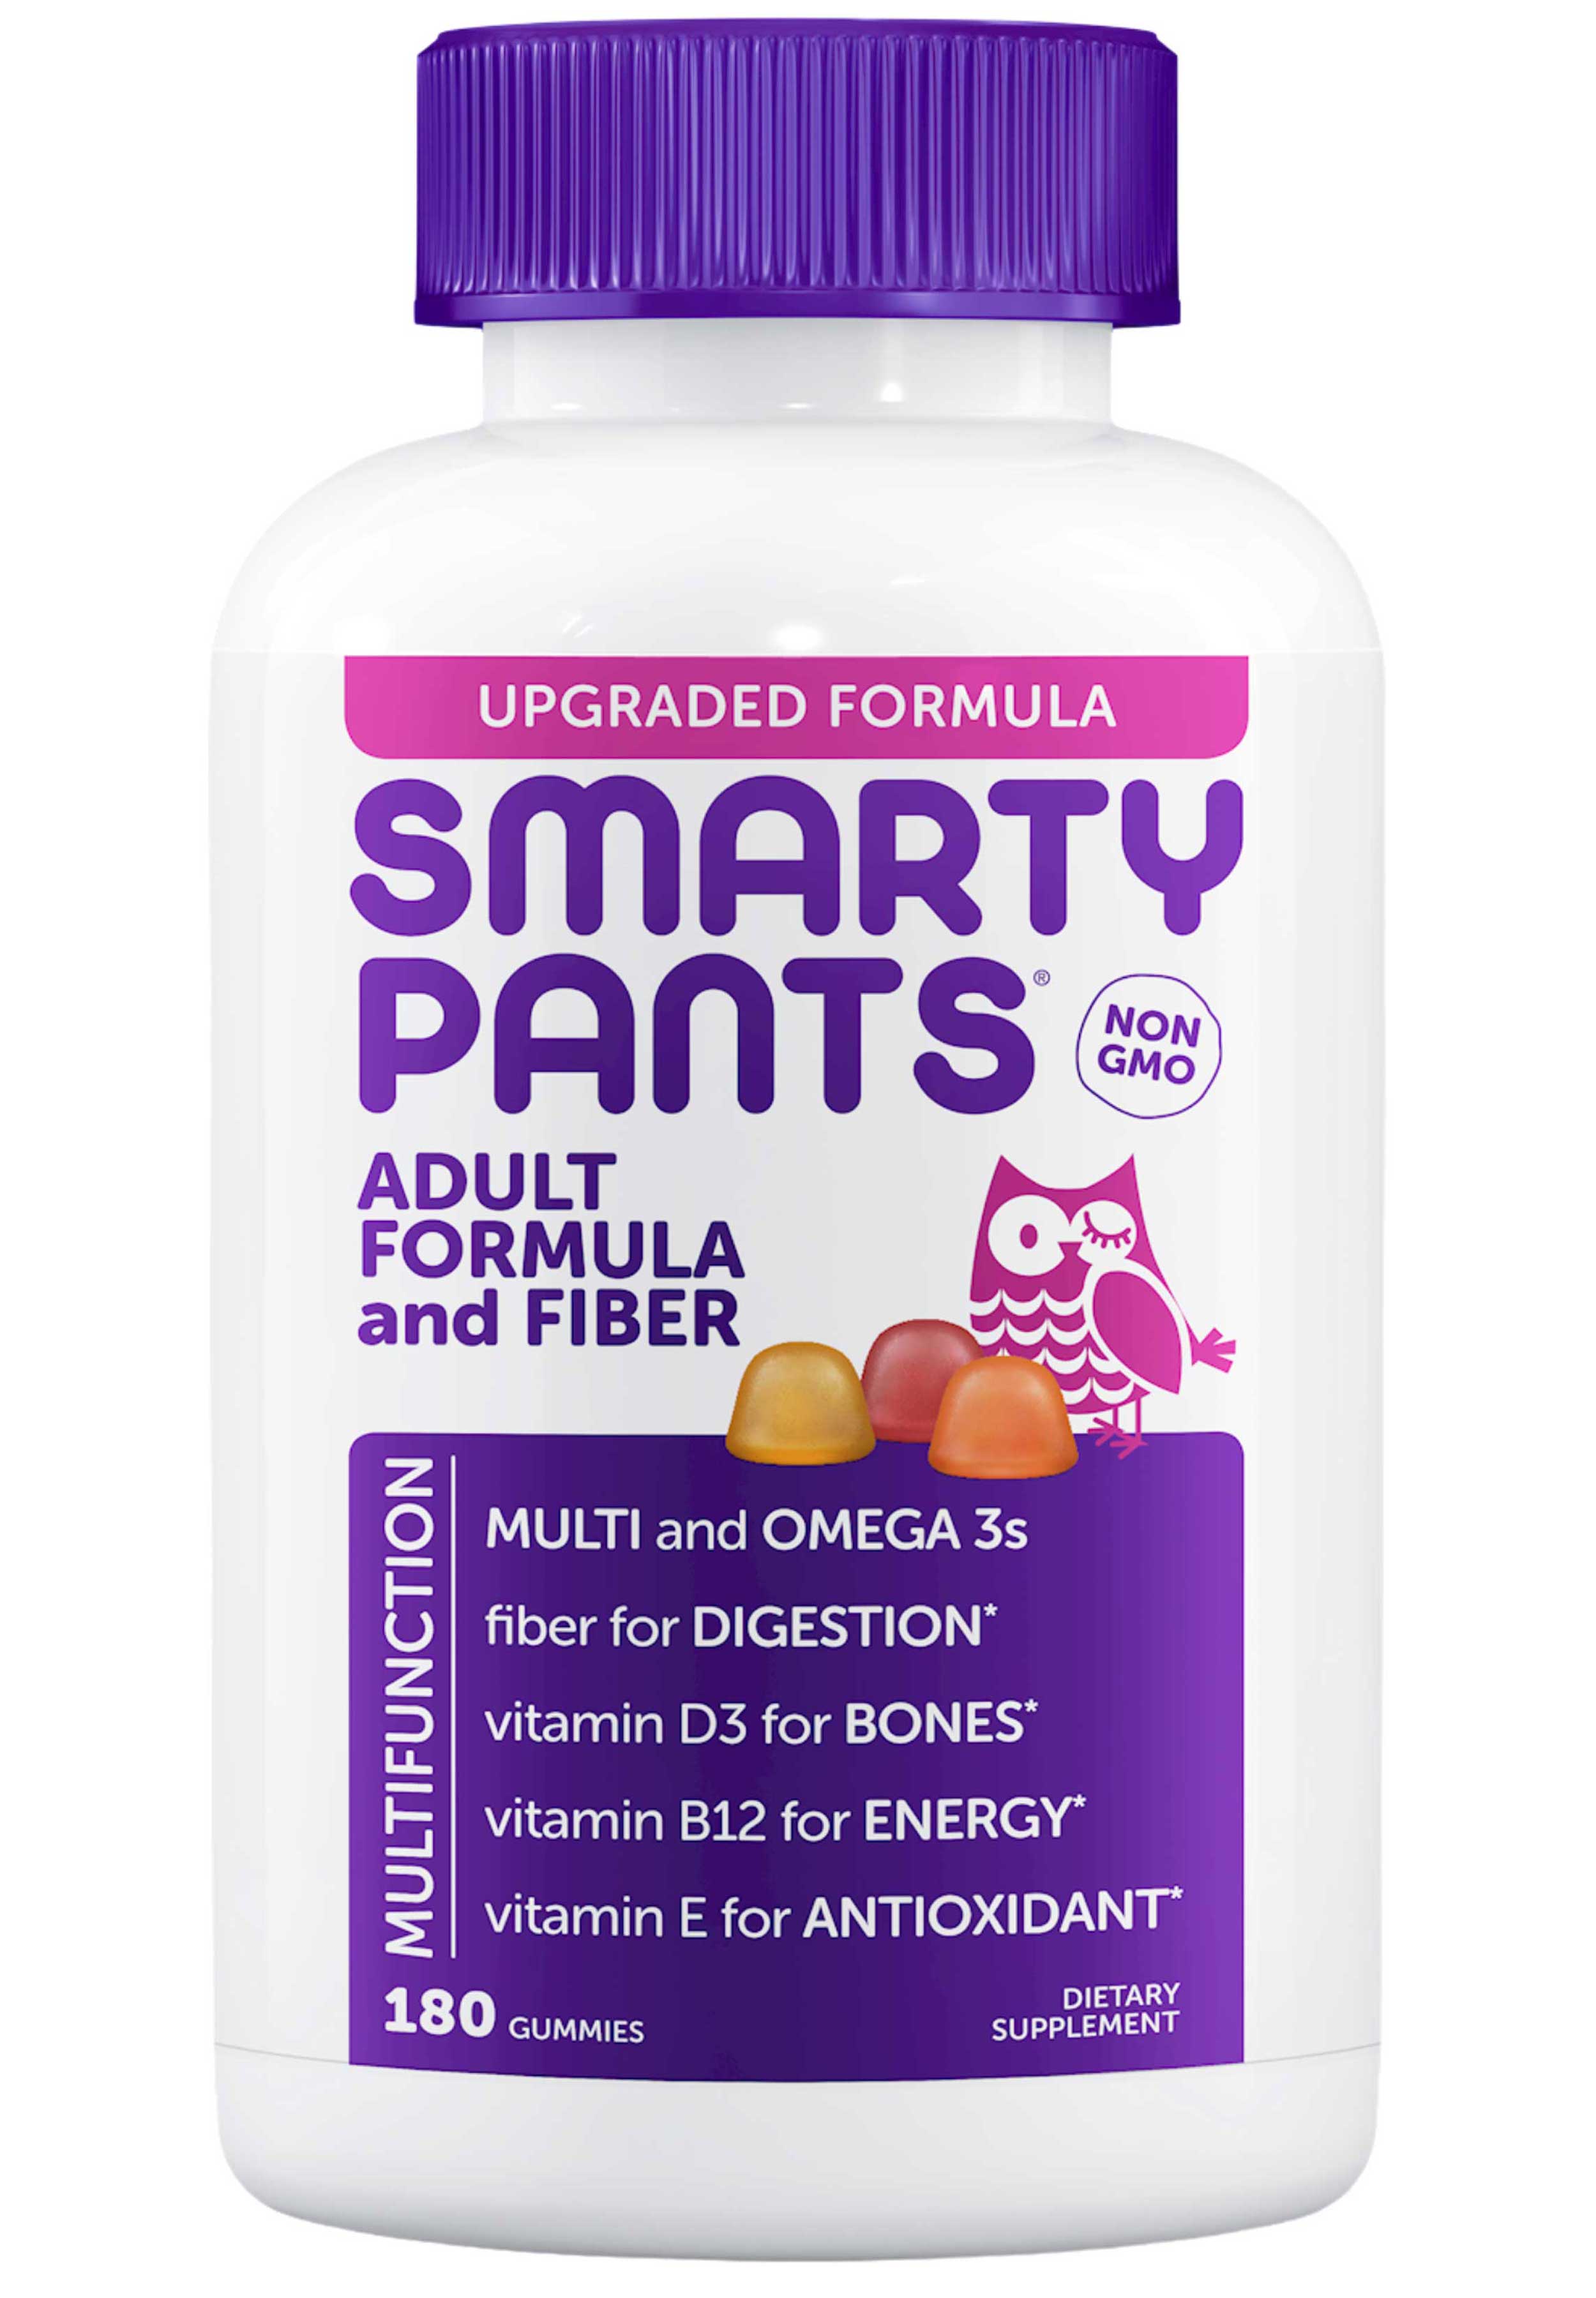 SmartyPants Adult Formula and Fiber